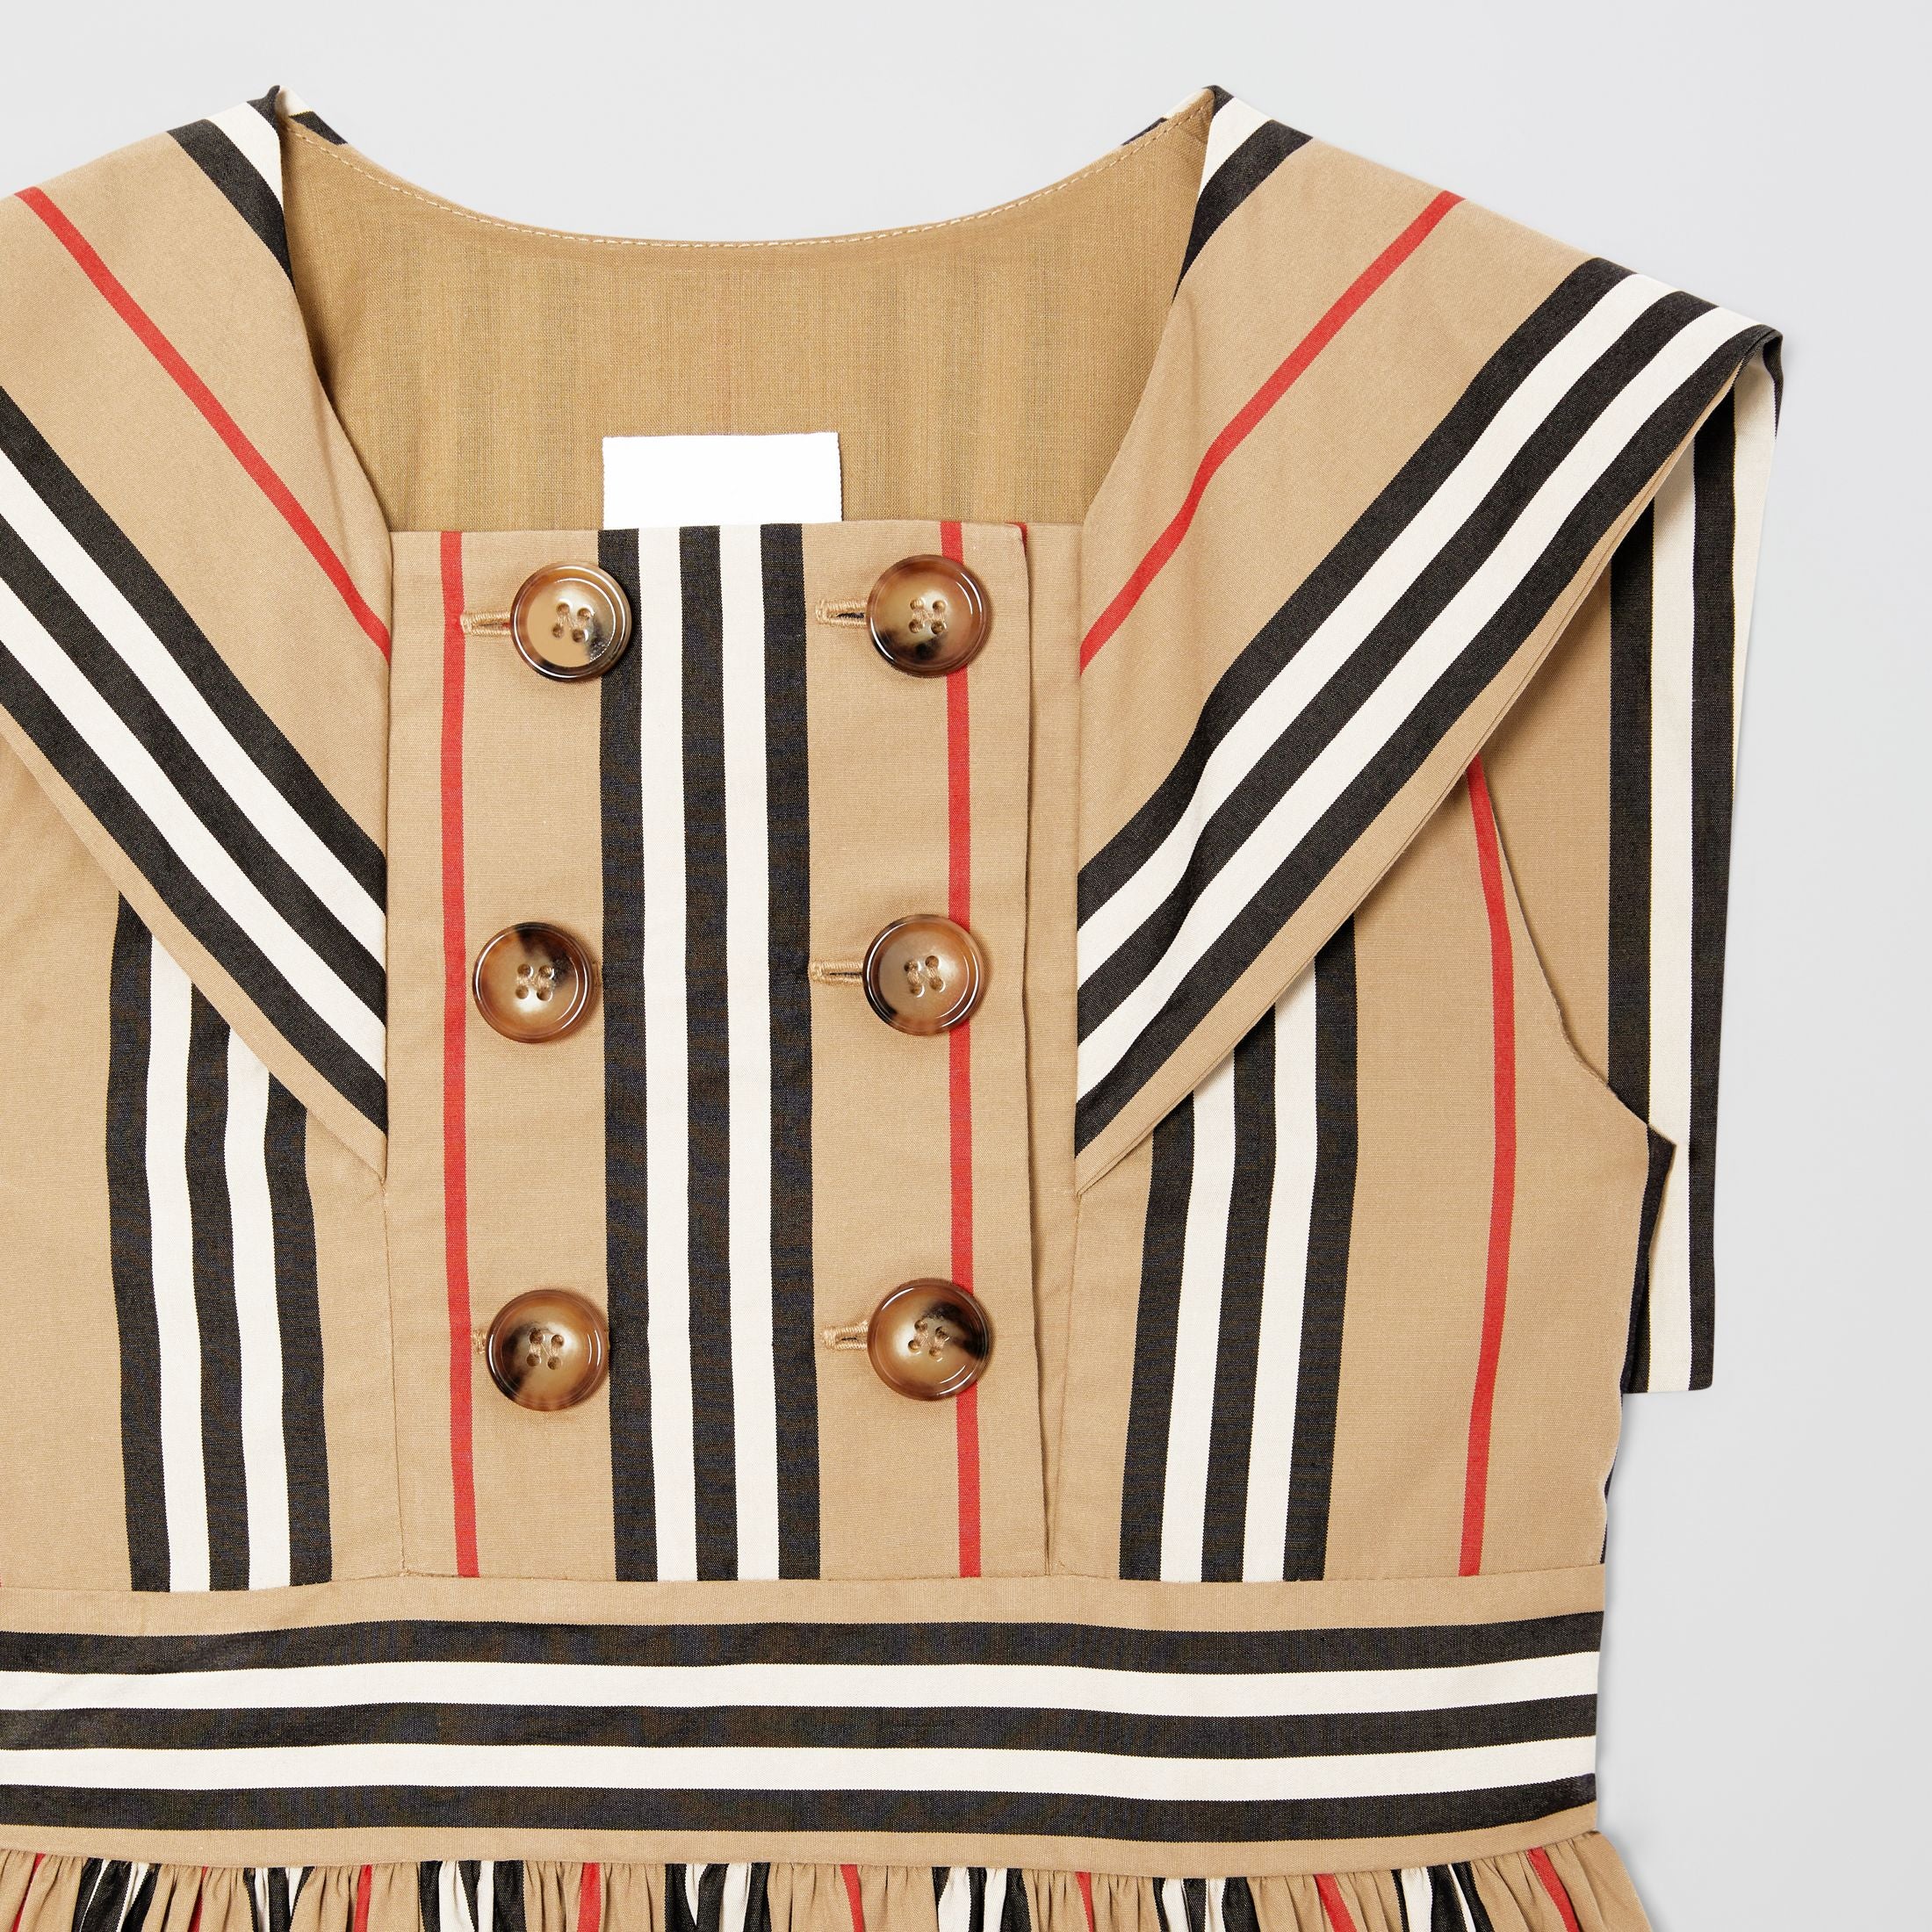 Girls Archive Beige Striped Cotton Dress